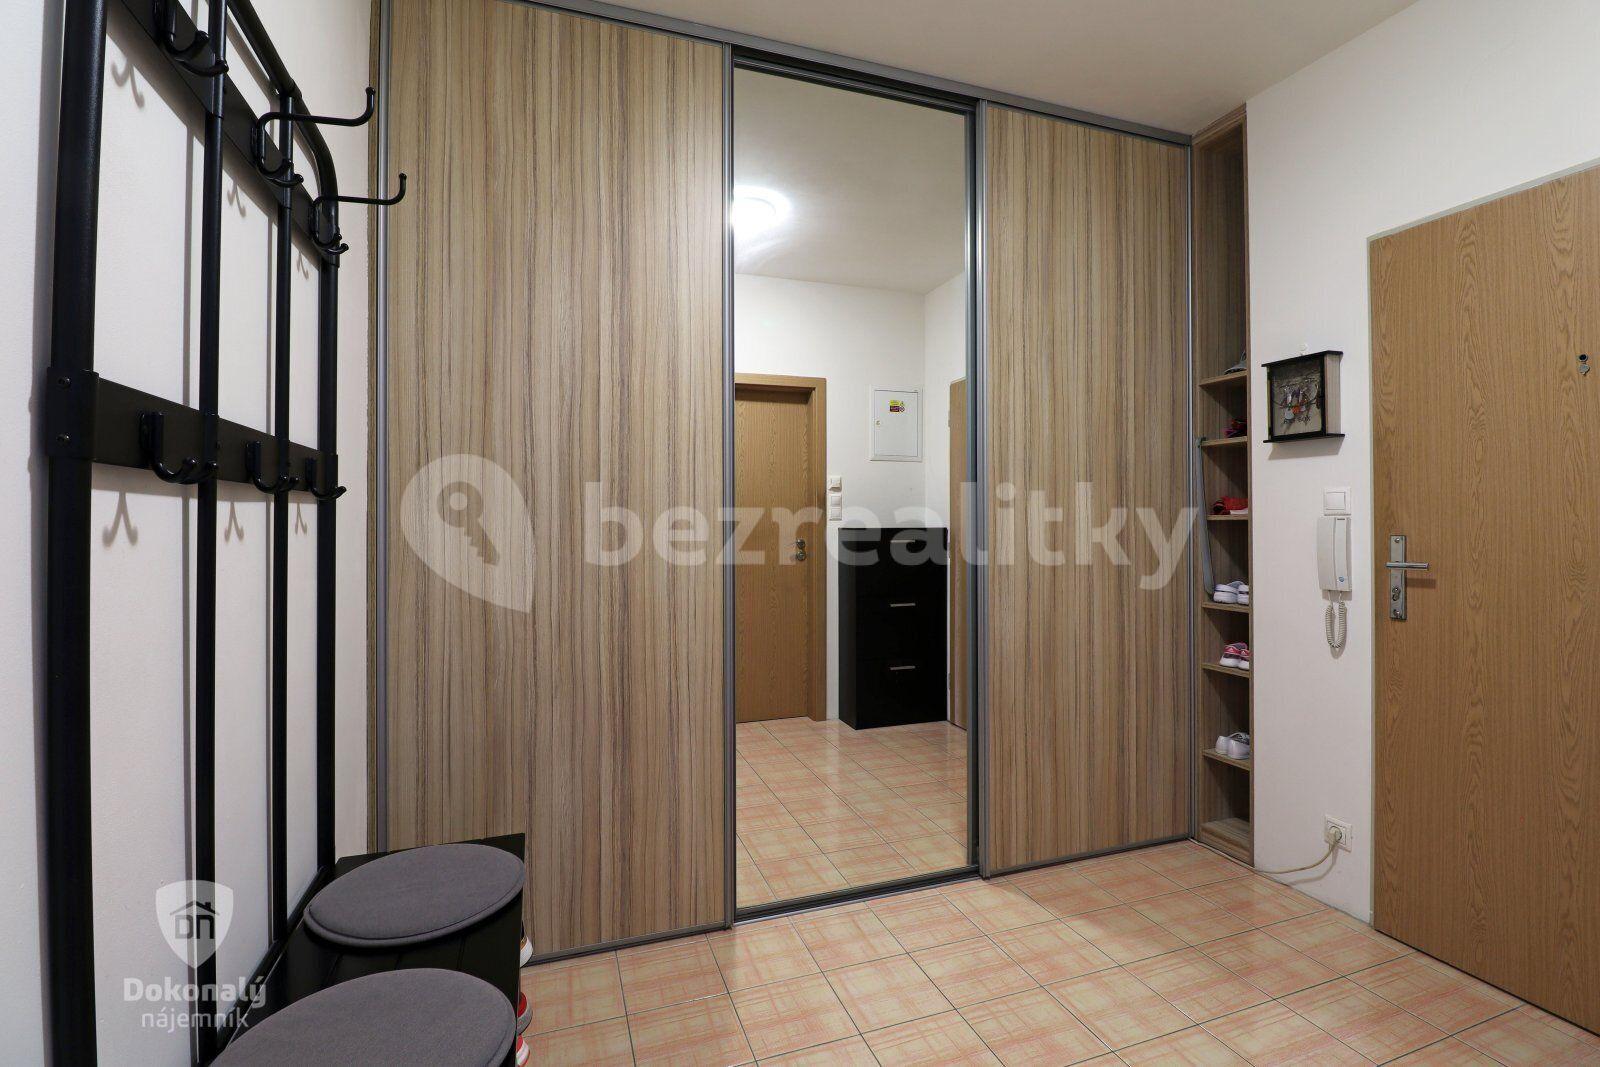 1 bedroom with open-plan kitchen flat to rent, 54 m², Kytlická, Prague, Prague